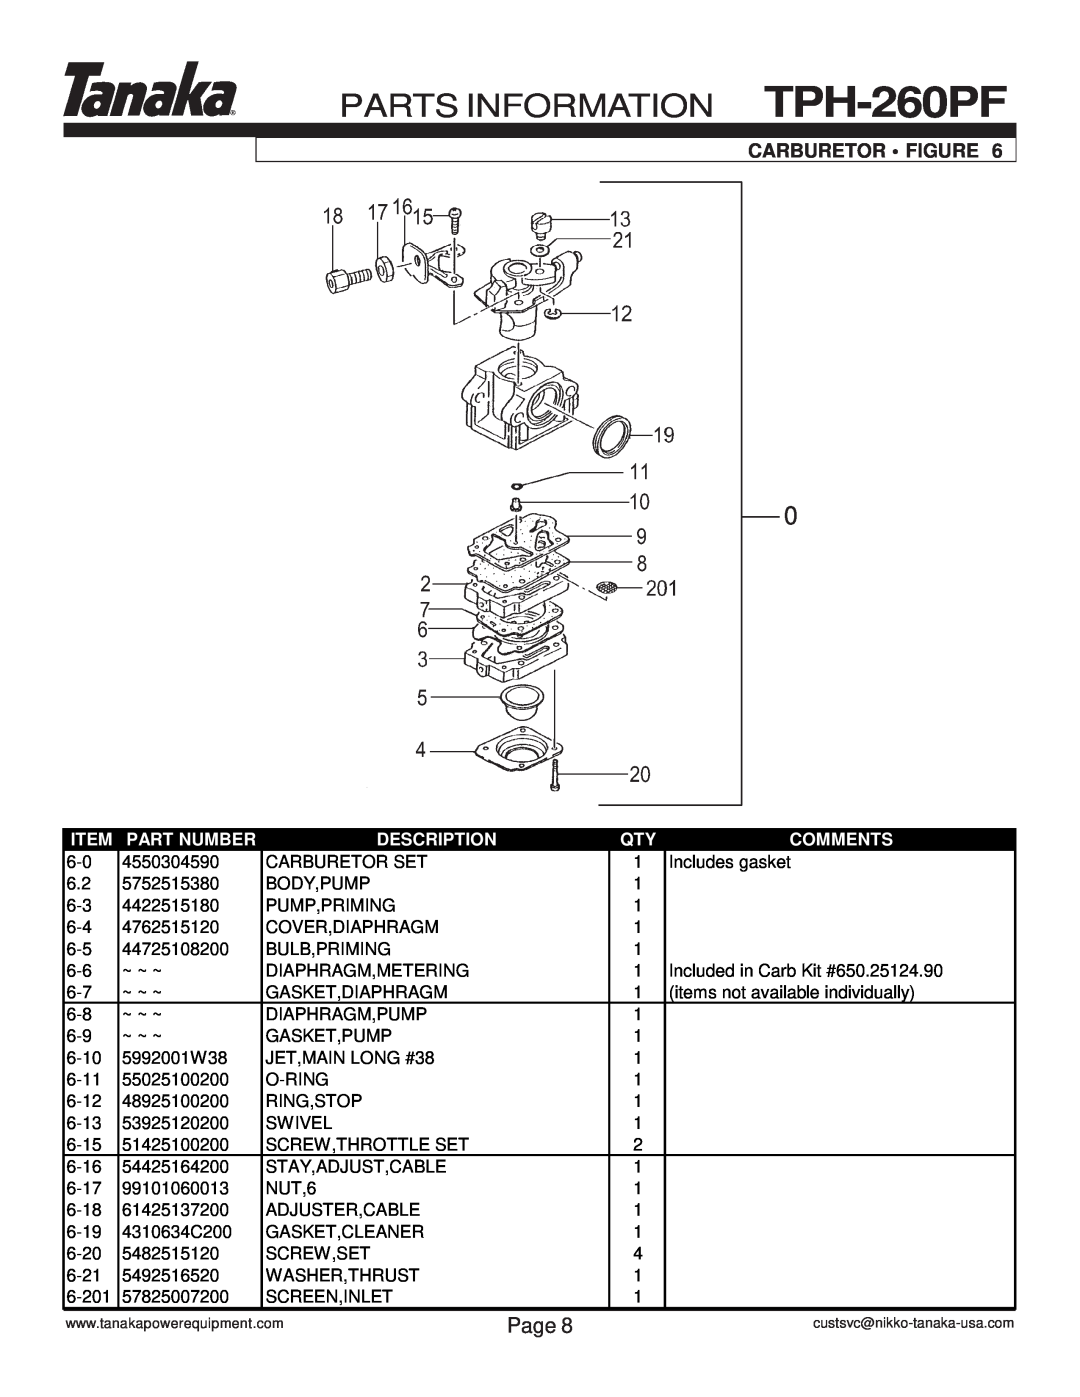 Tanaka manual Carburetor Figure, PARTS INFORMATION TPH-260PF, Page, Part Number, Description, Comments 